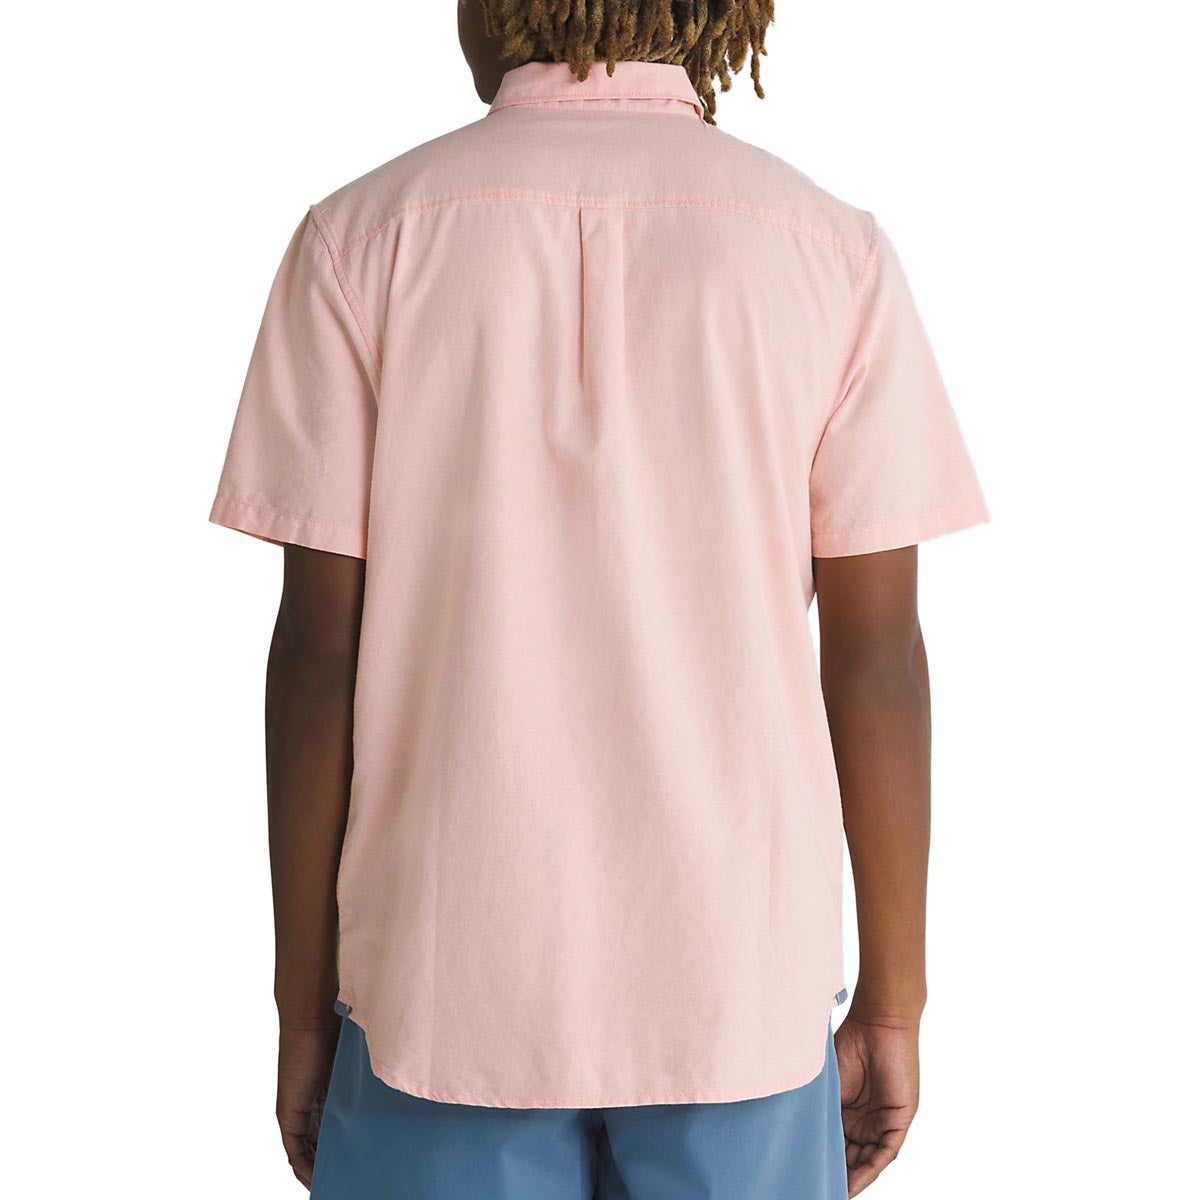 Vans Houser Shirt - Copper Tan image 2